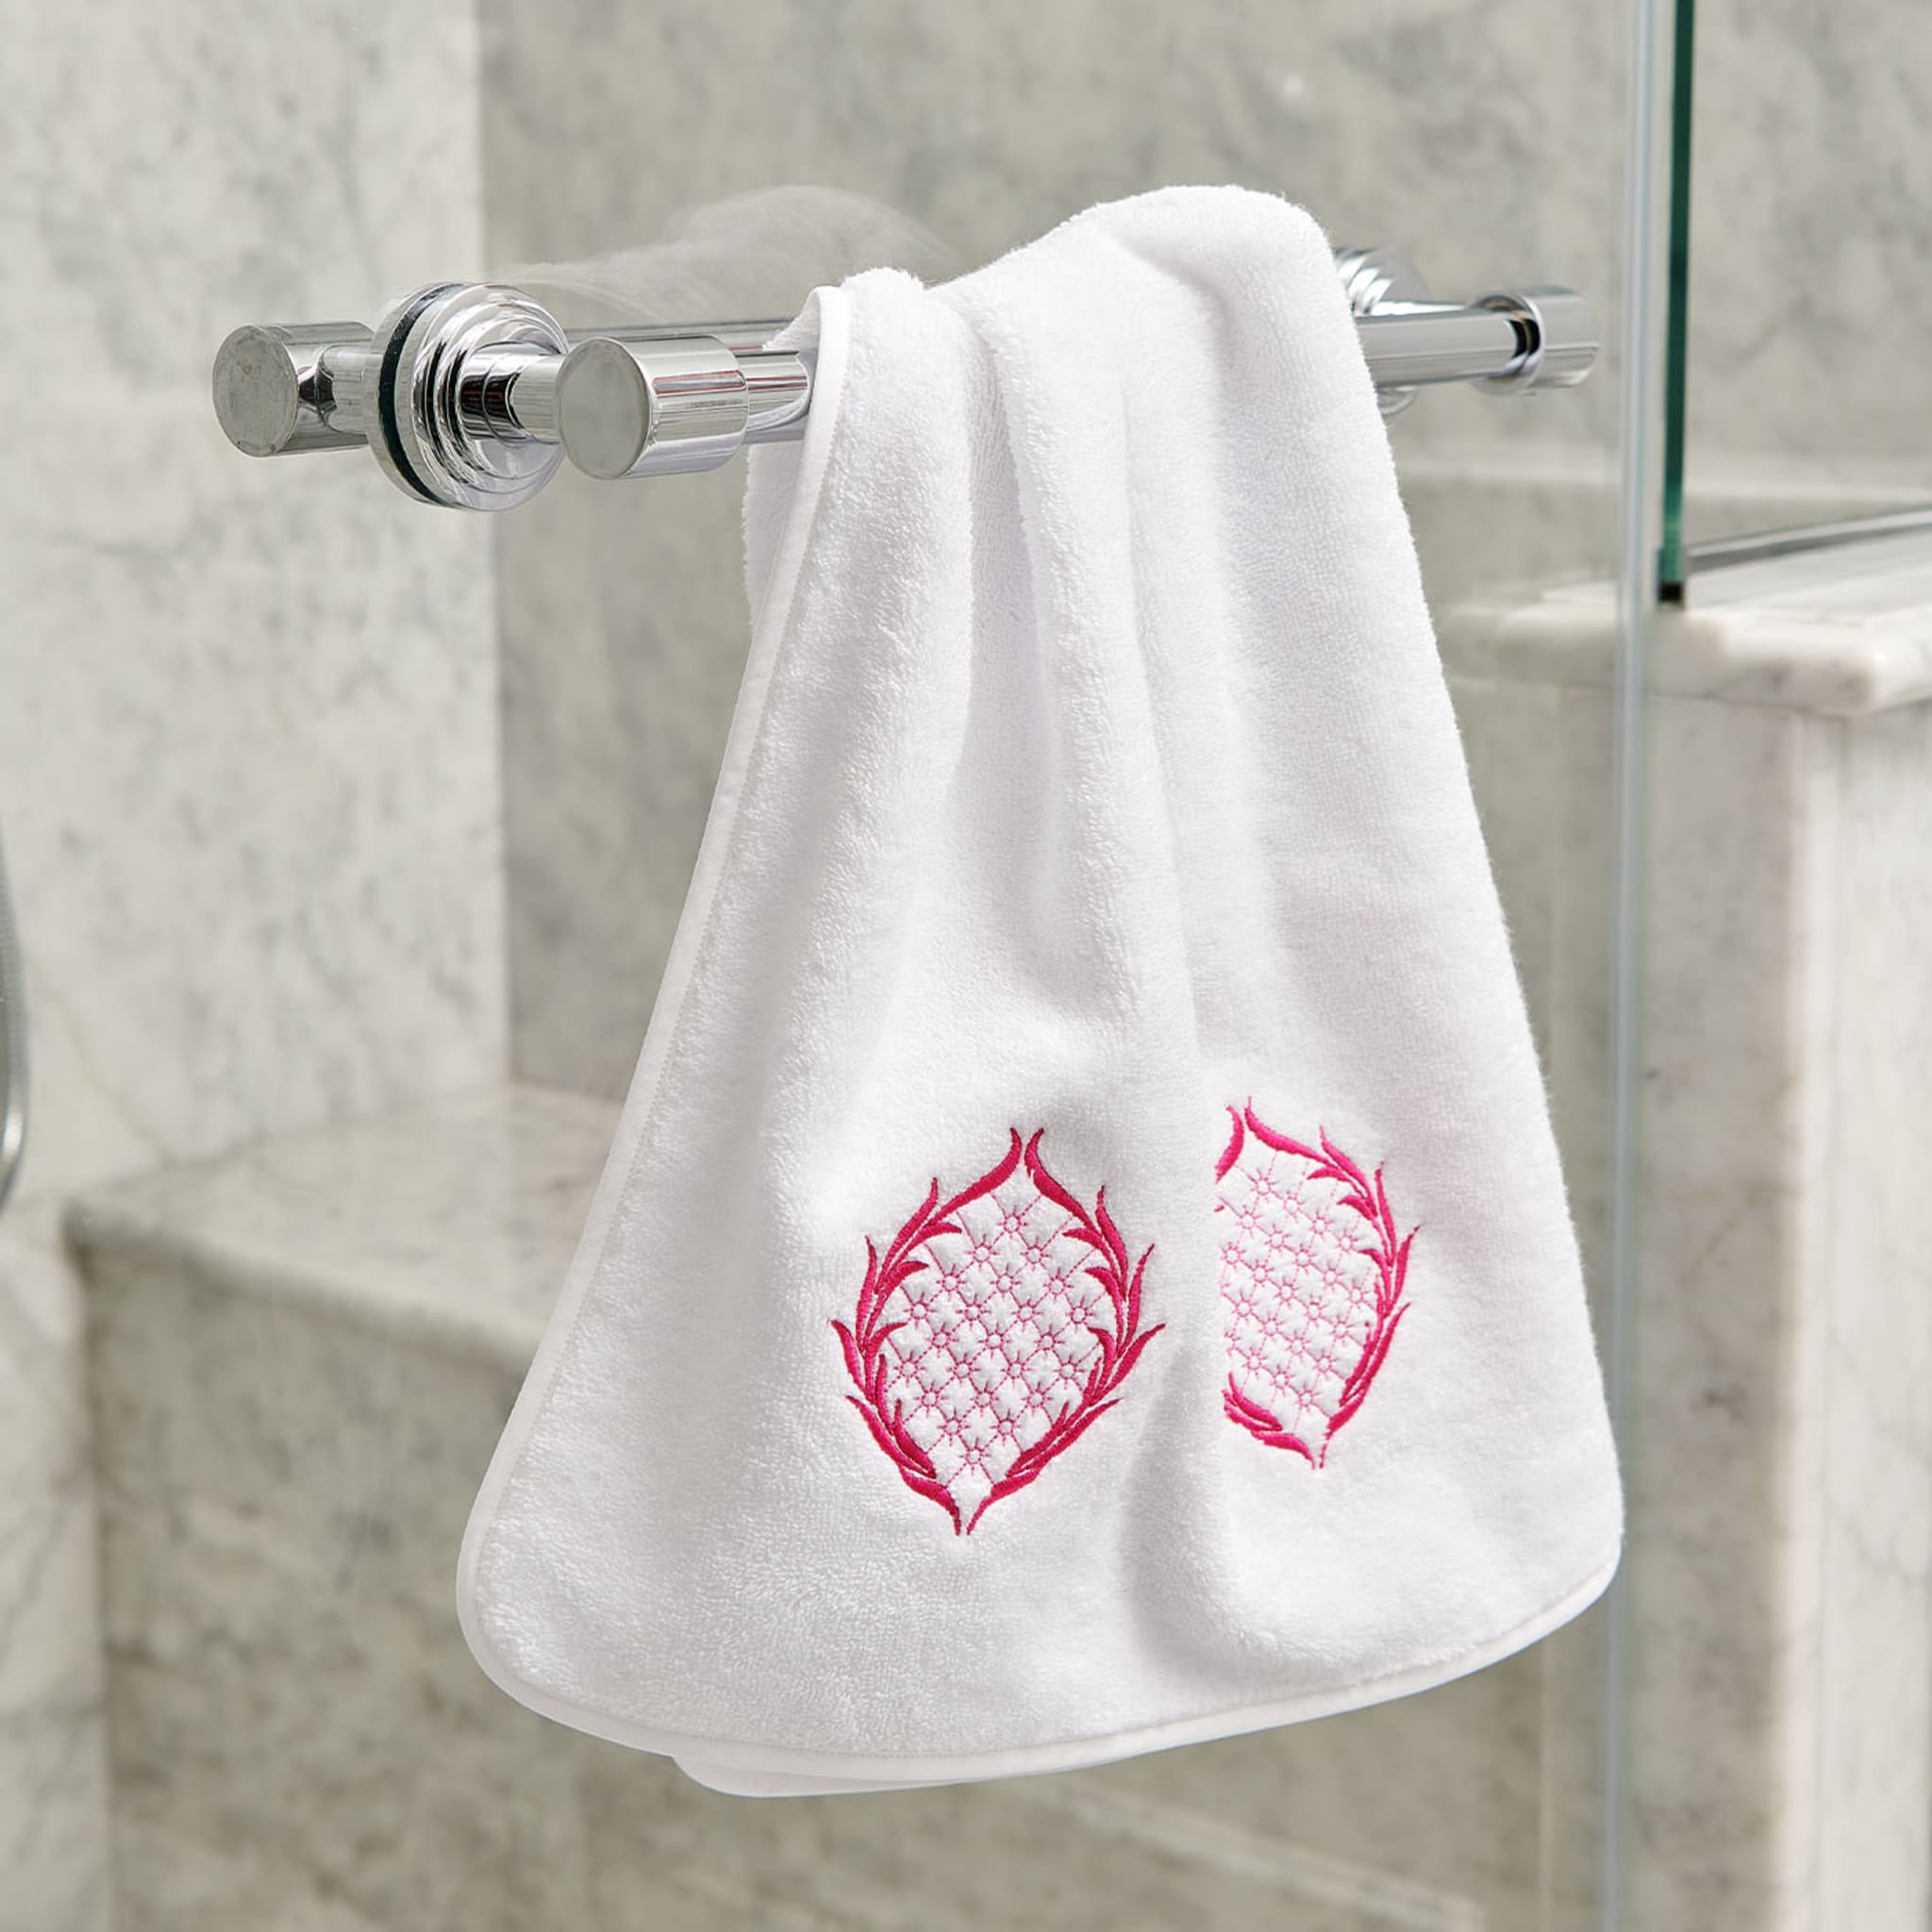 Ananas Embroidery White & Fuchsia Bath Towel - Alternative view 1